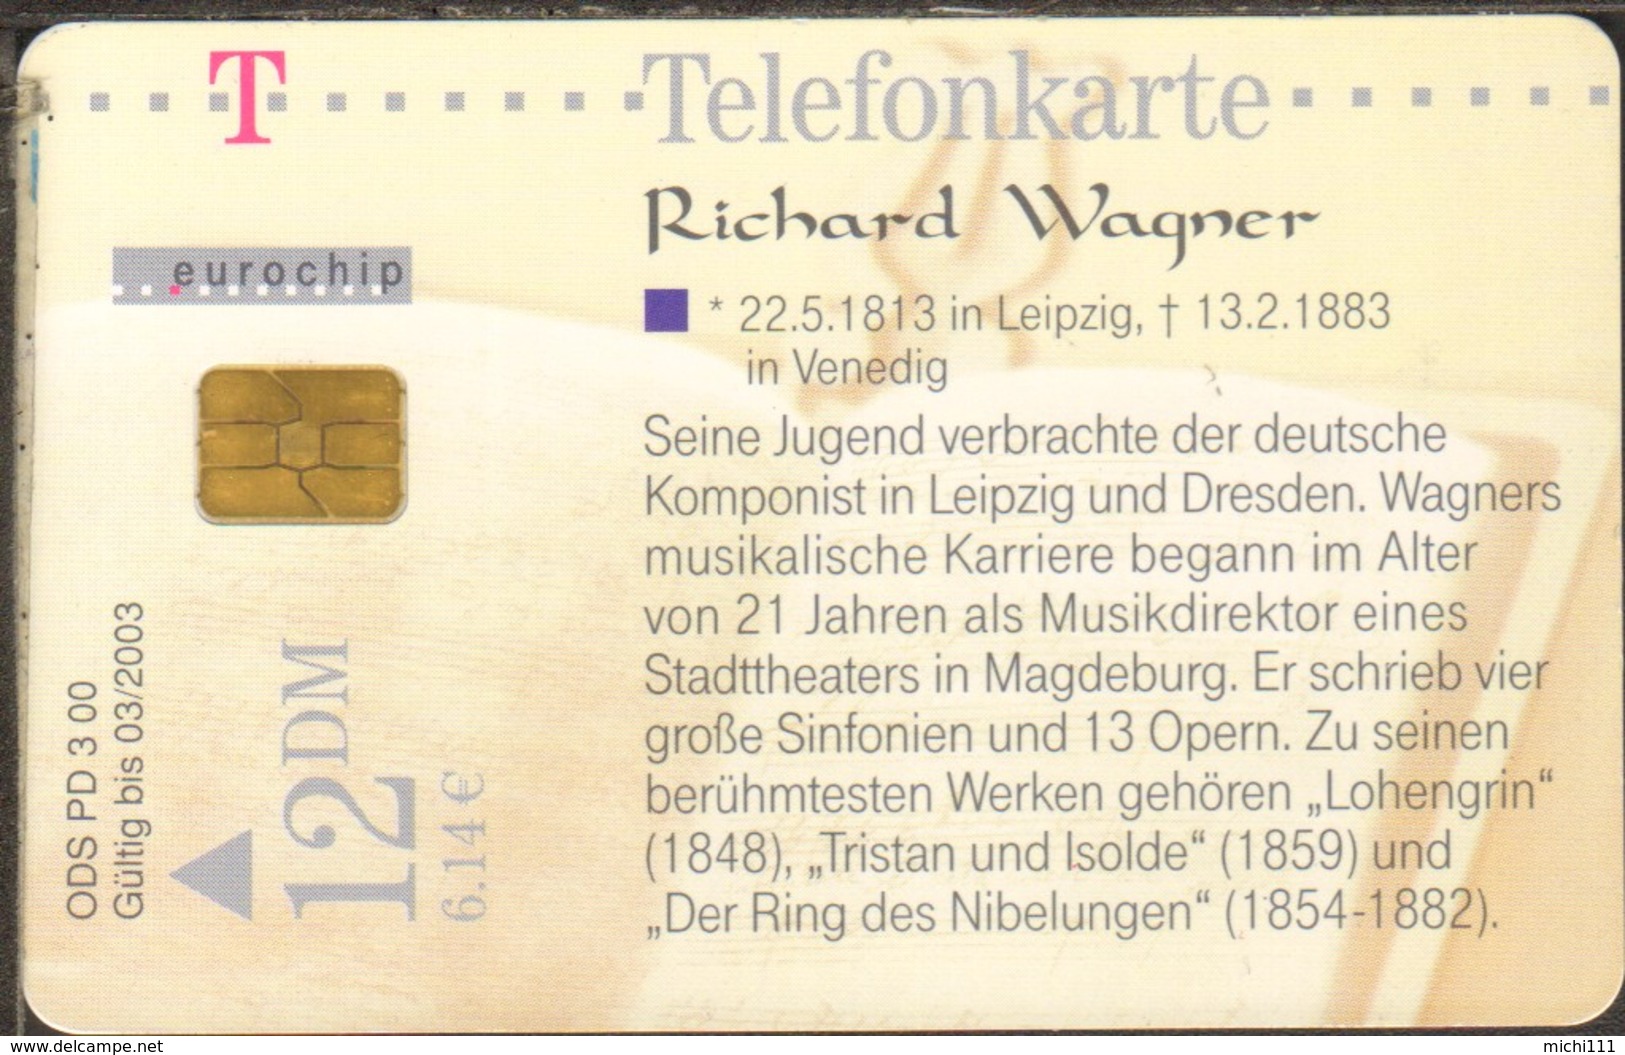 Phonecard Telefonkarte Richard Wagner 2003 PD 3 00 12DM 6,14€ Used - P & PD-Series : Guichet - D. Telekom